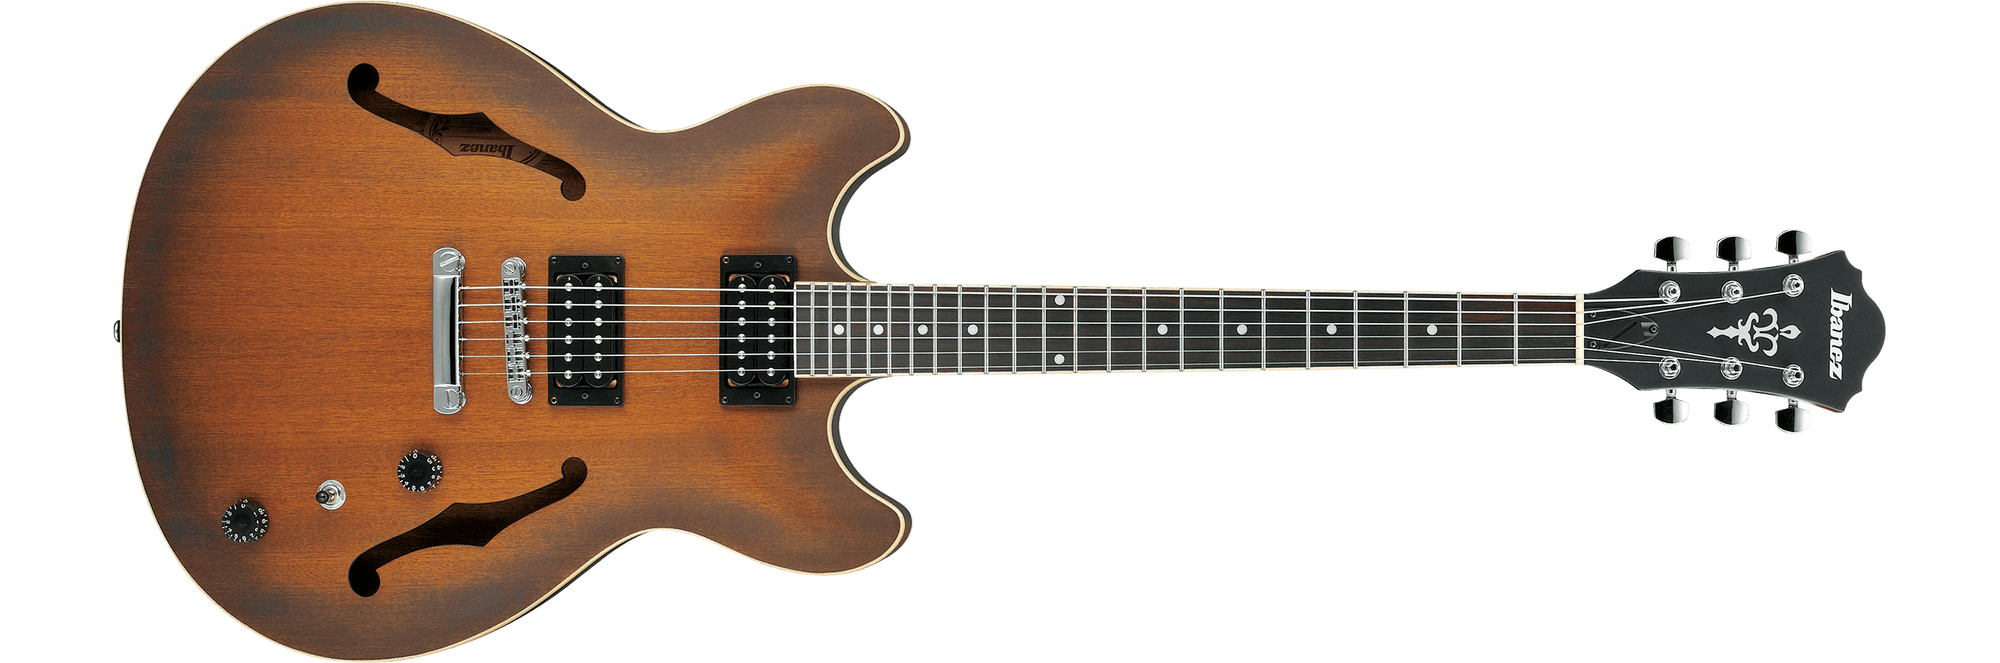 Ibanez AS53-TF Artcore 6 String RH Semi-Hollowbody Electric Guitari in Tobacco Flat - The Guitar World